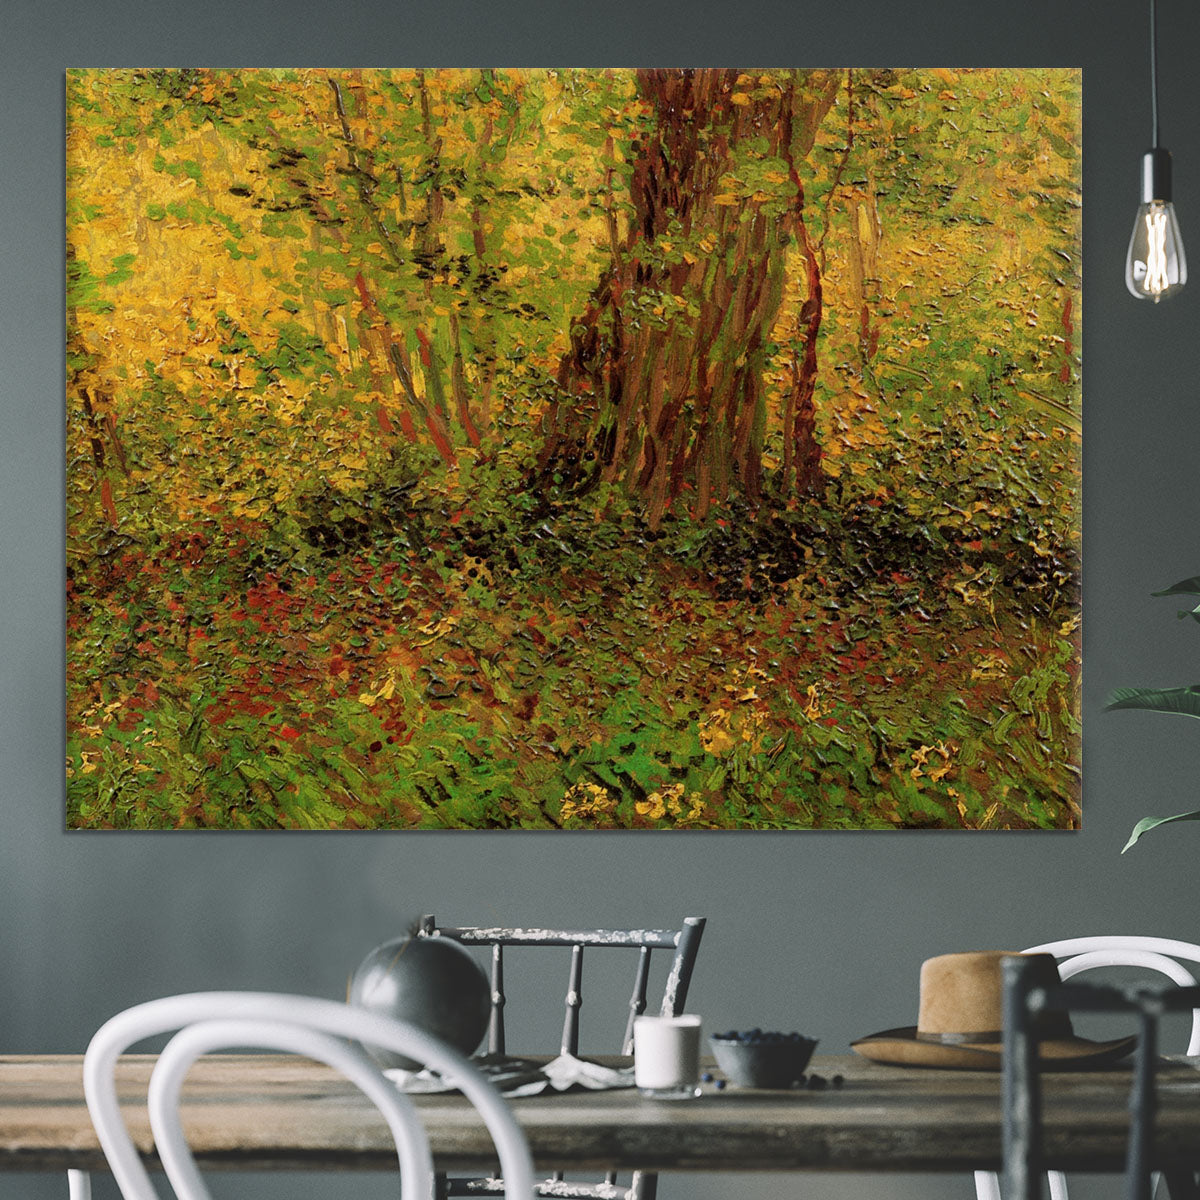 Undergrowth 2 by Van Gogh Canvas Print or Poster - Canvas Art Rocks - 3